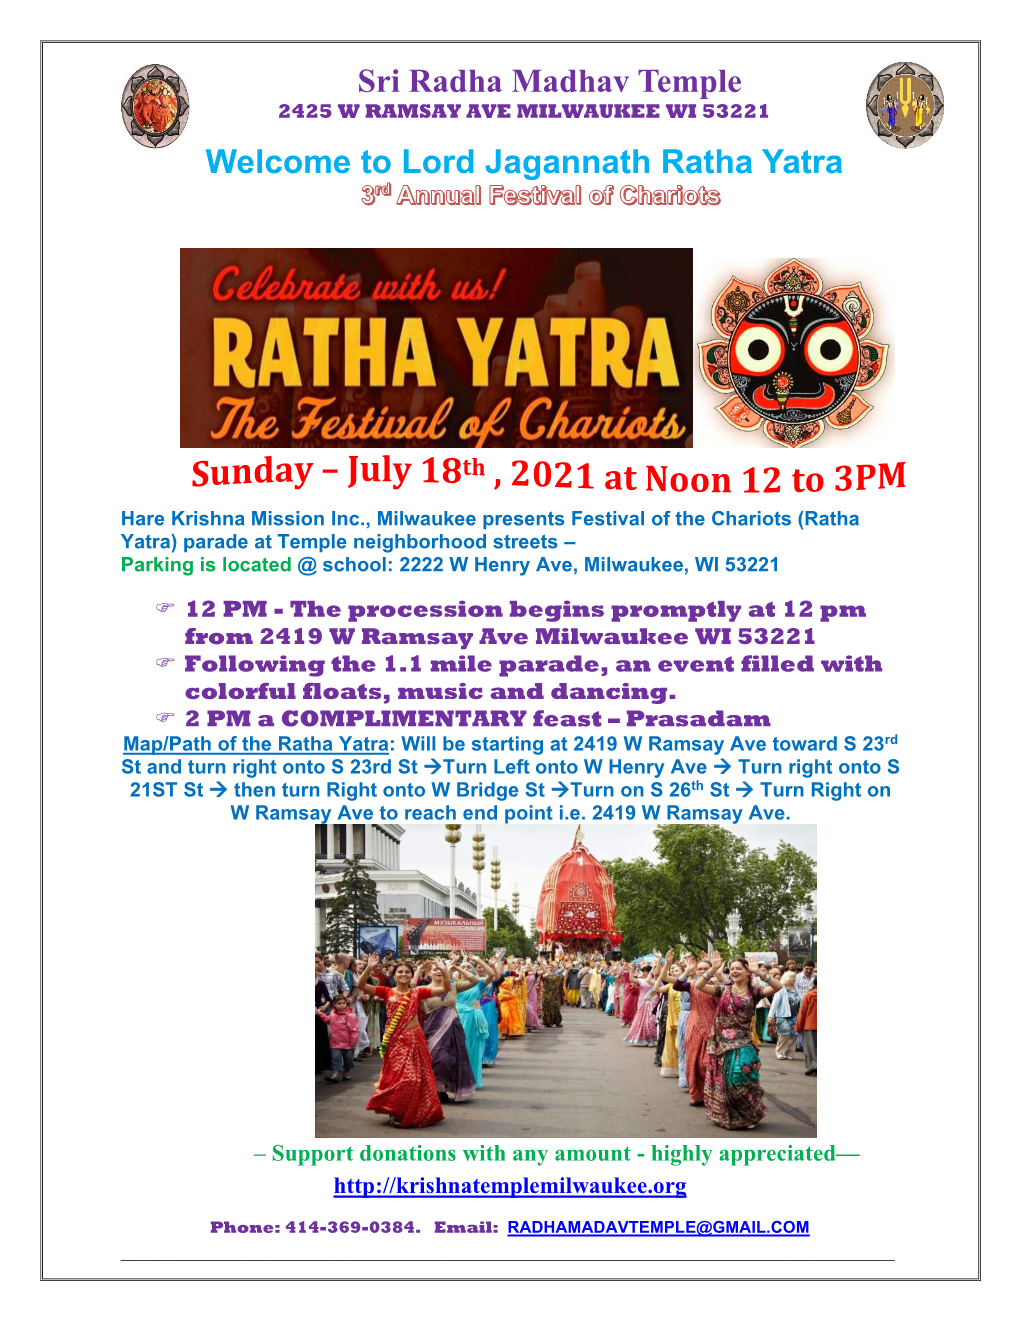 Sri Radha Madhav Temple Welcome to Lord Jagannath Ratha Yatra